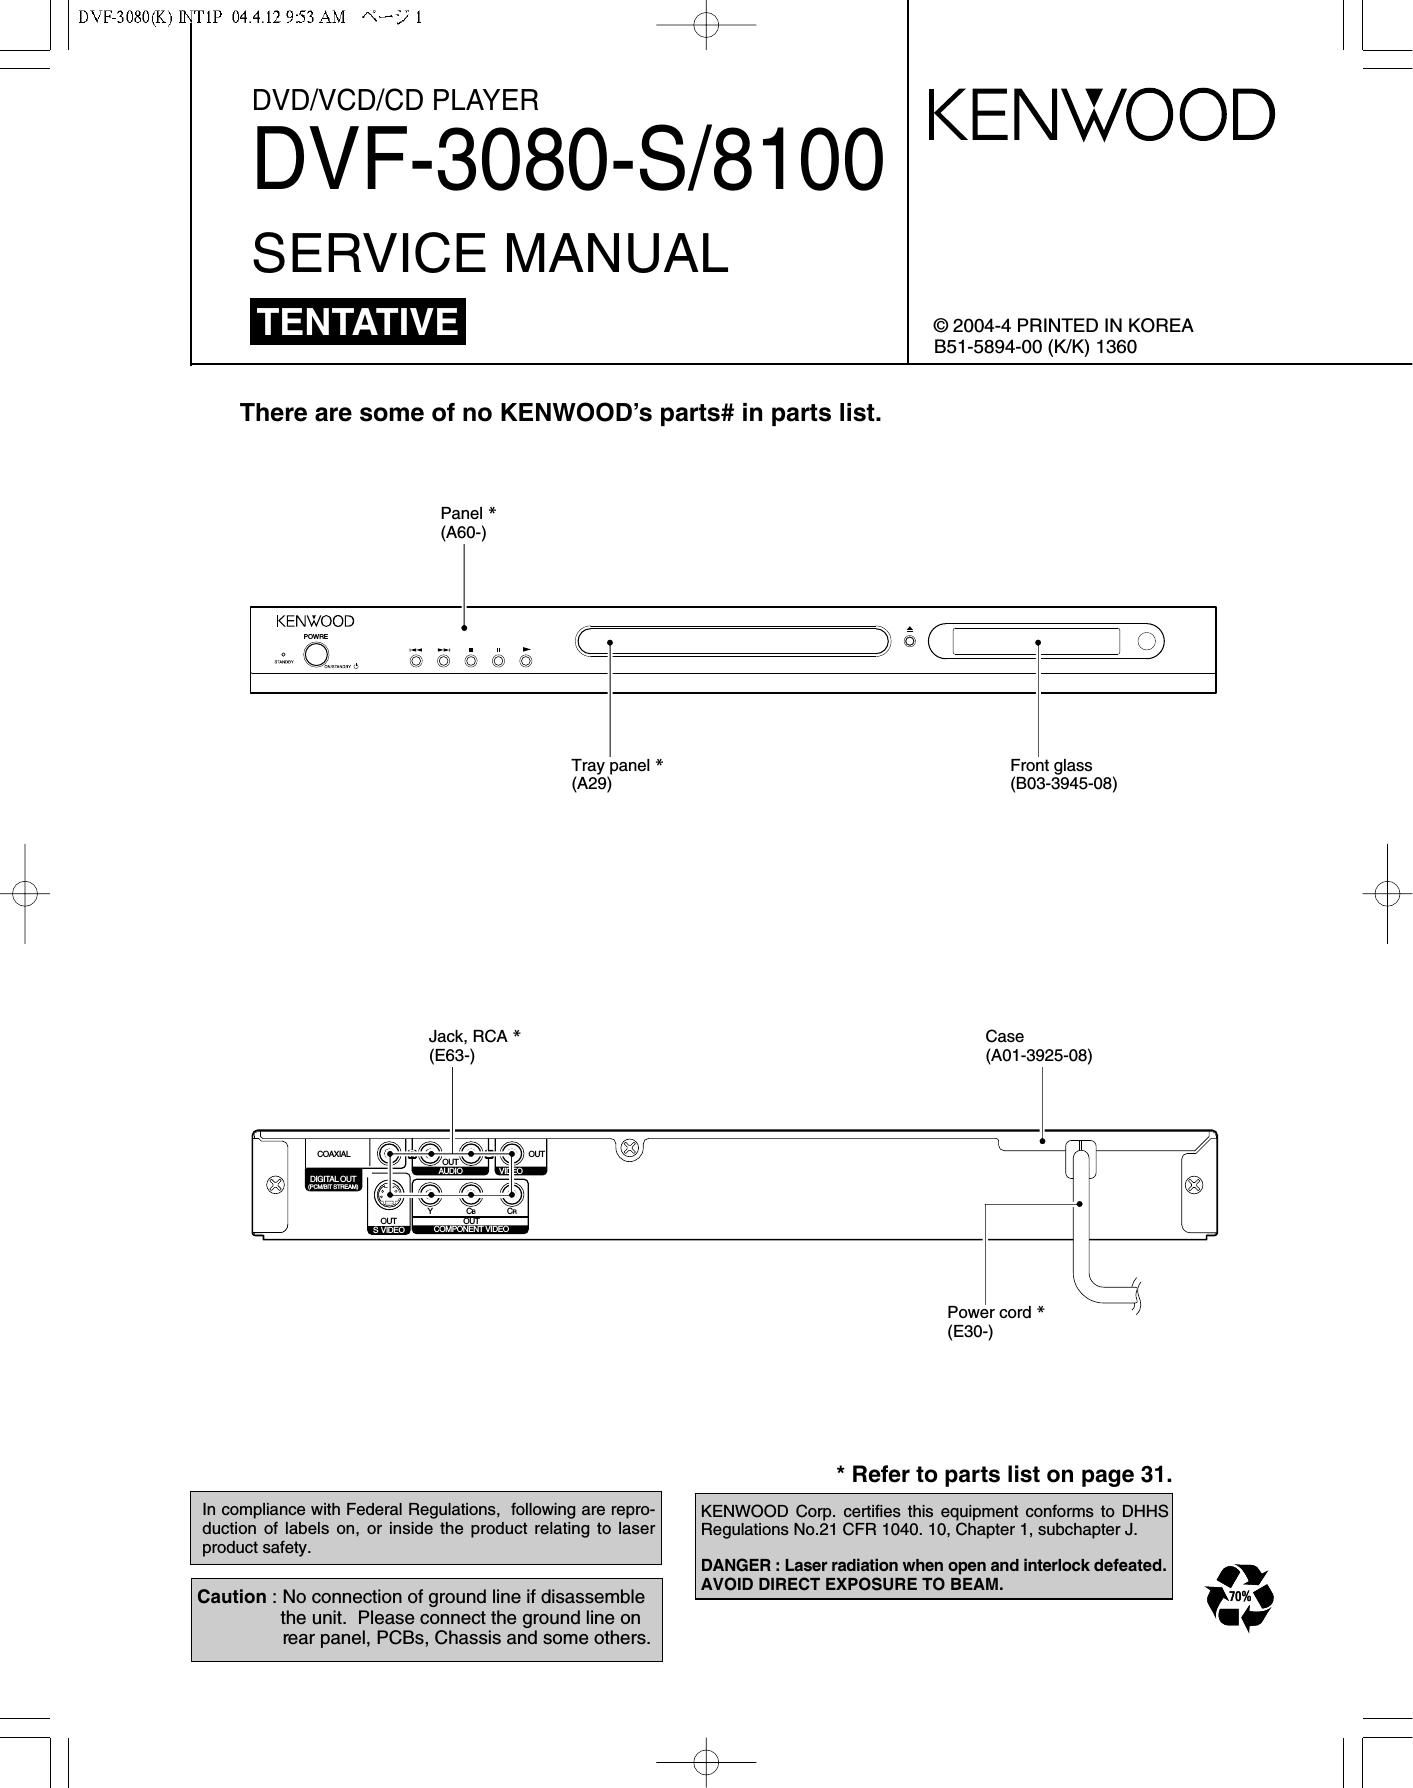 Kenwood DVFS 3100 Service Manual